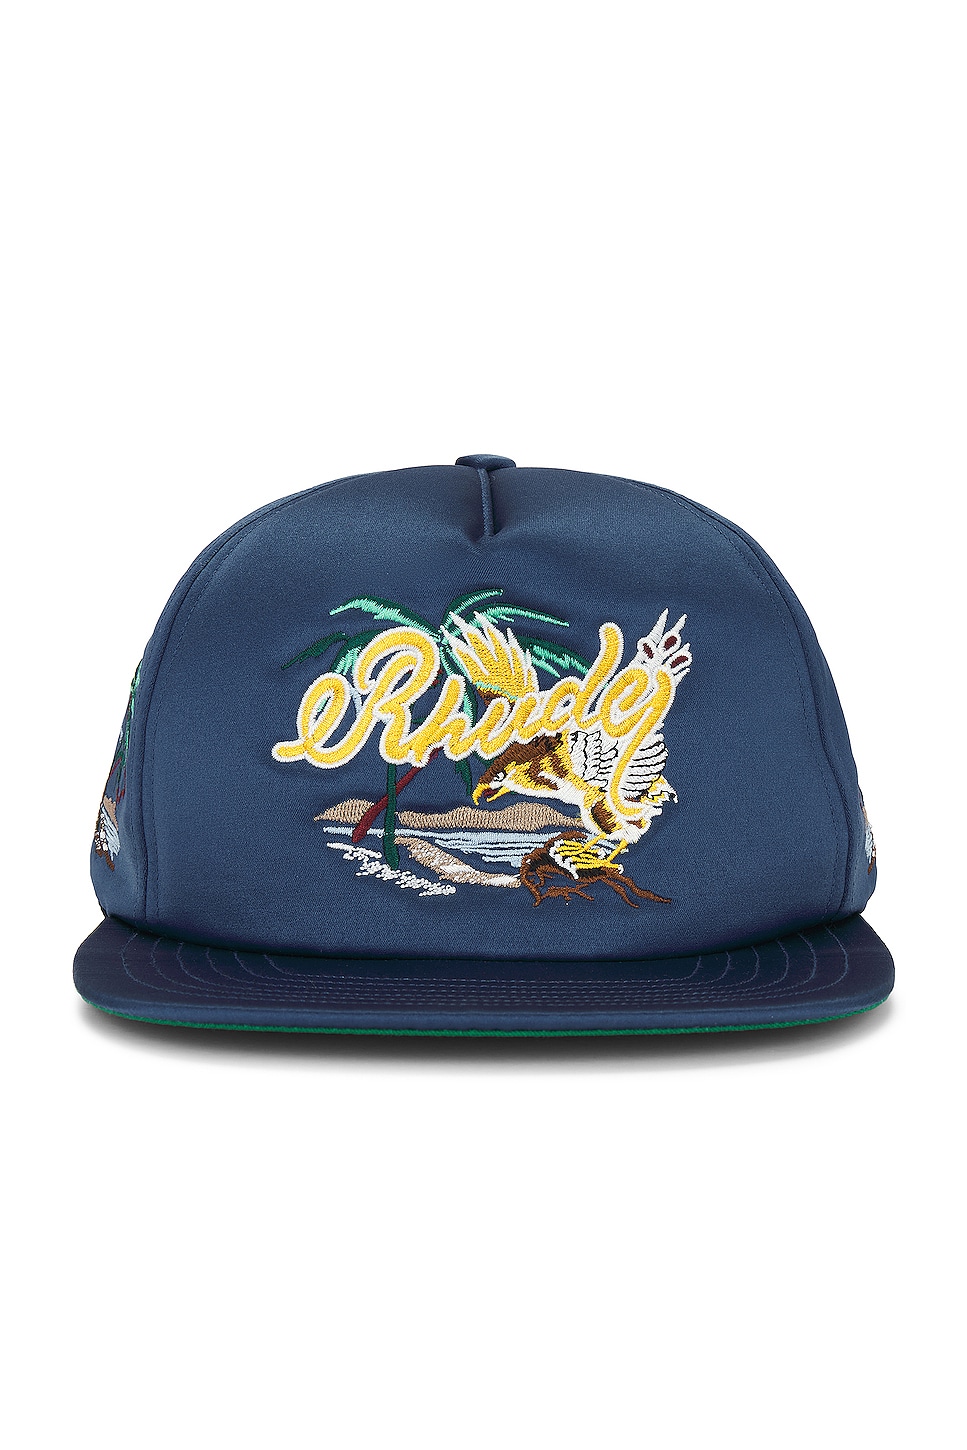 Rhude Palm Eagles Souvenier Hat in Blue